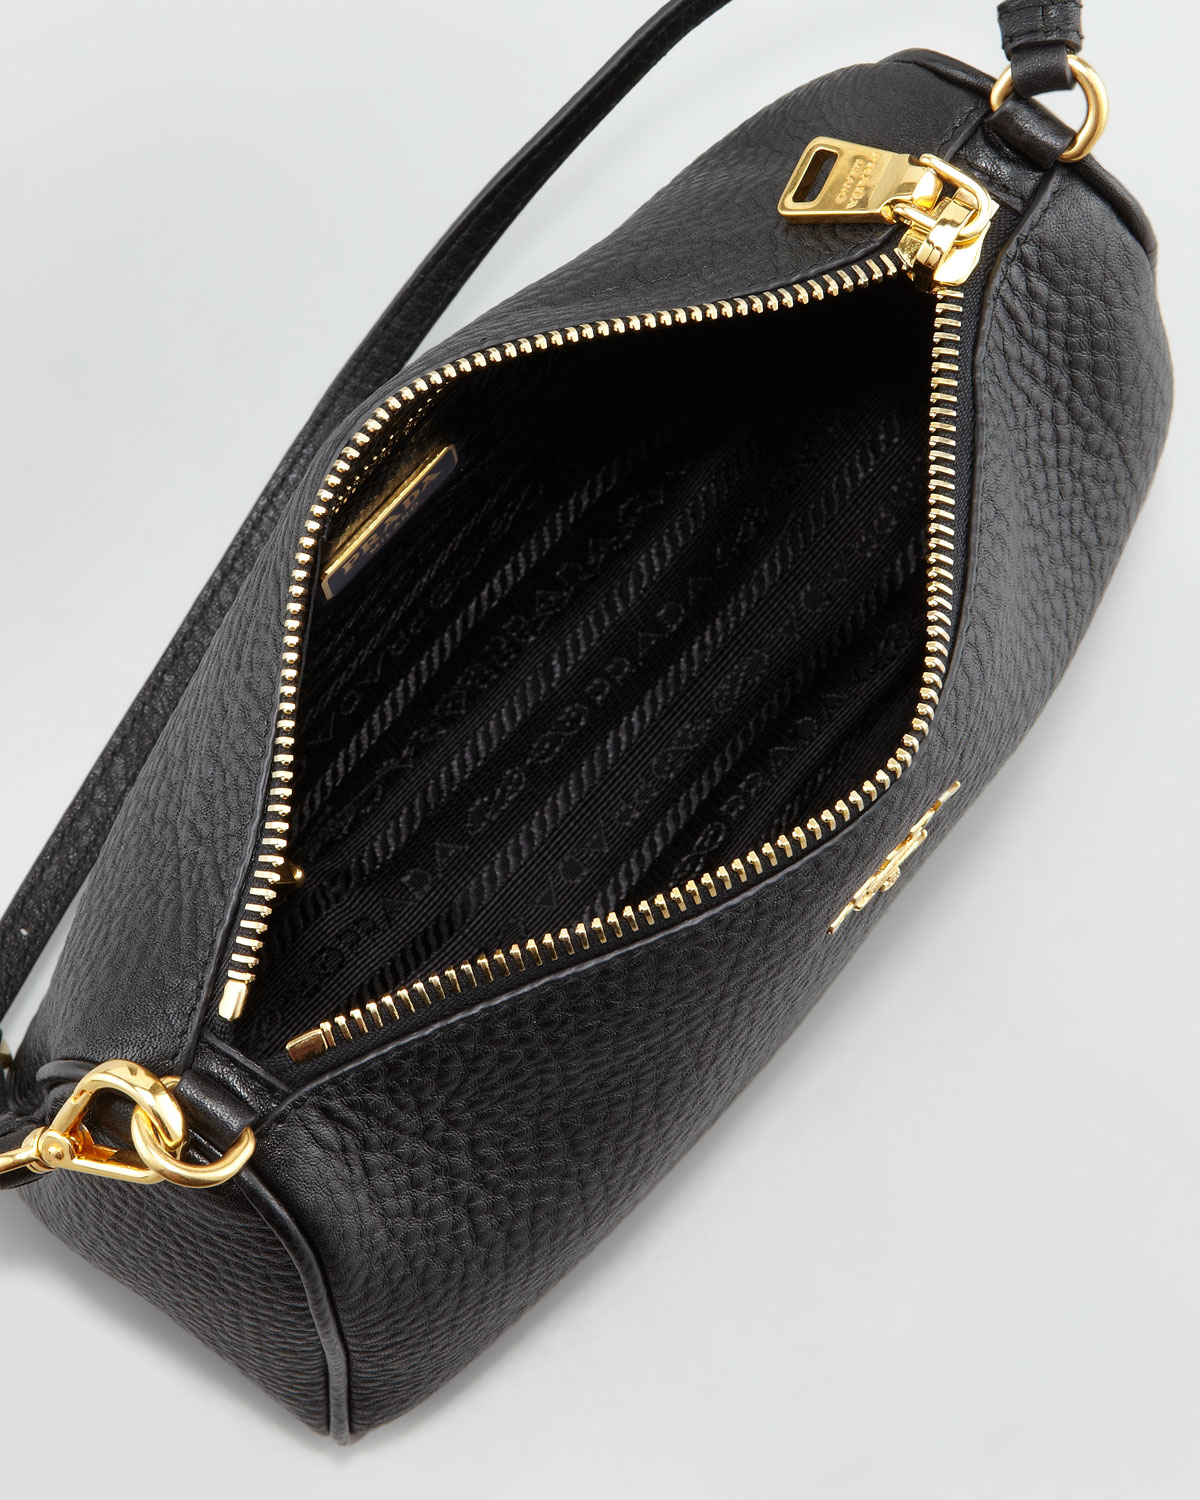 Prada Daino Mini Shoulder Bag in Nero (Black) - Lyst